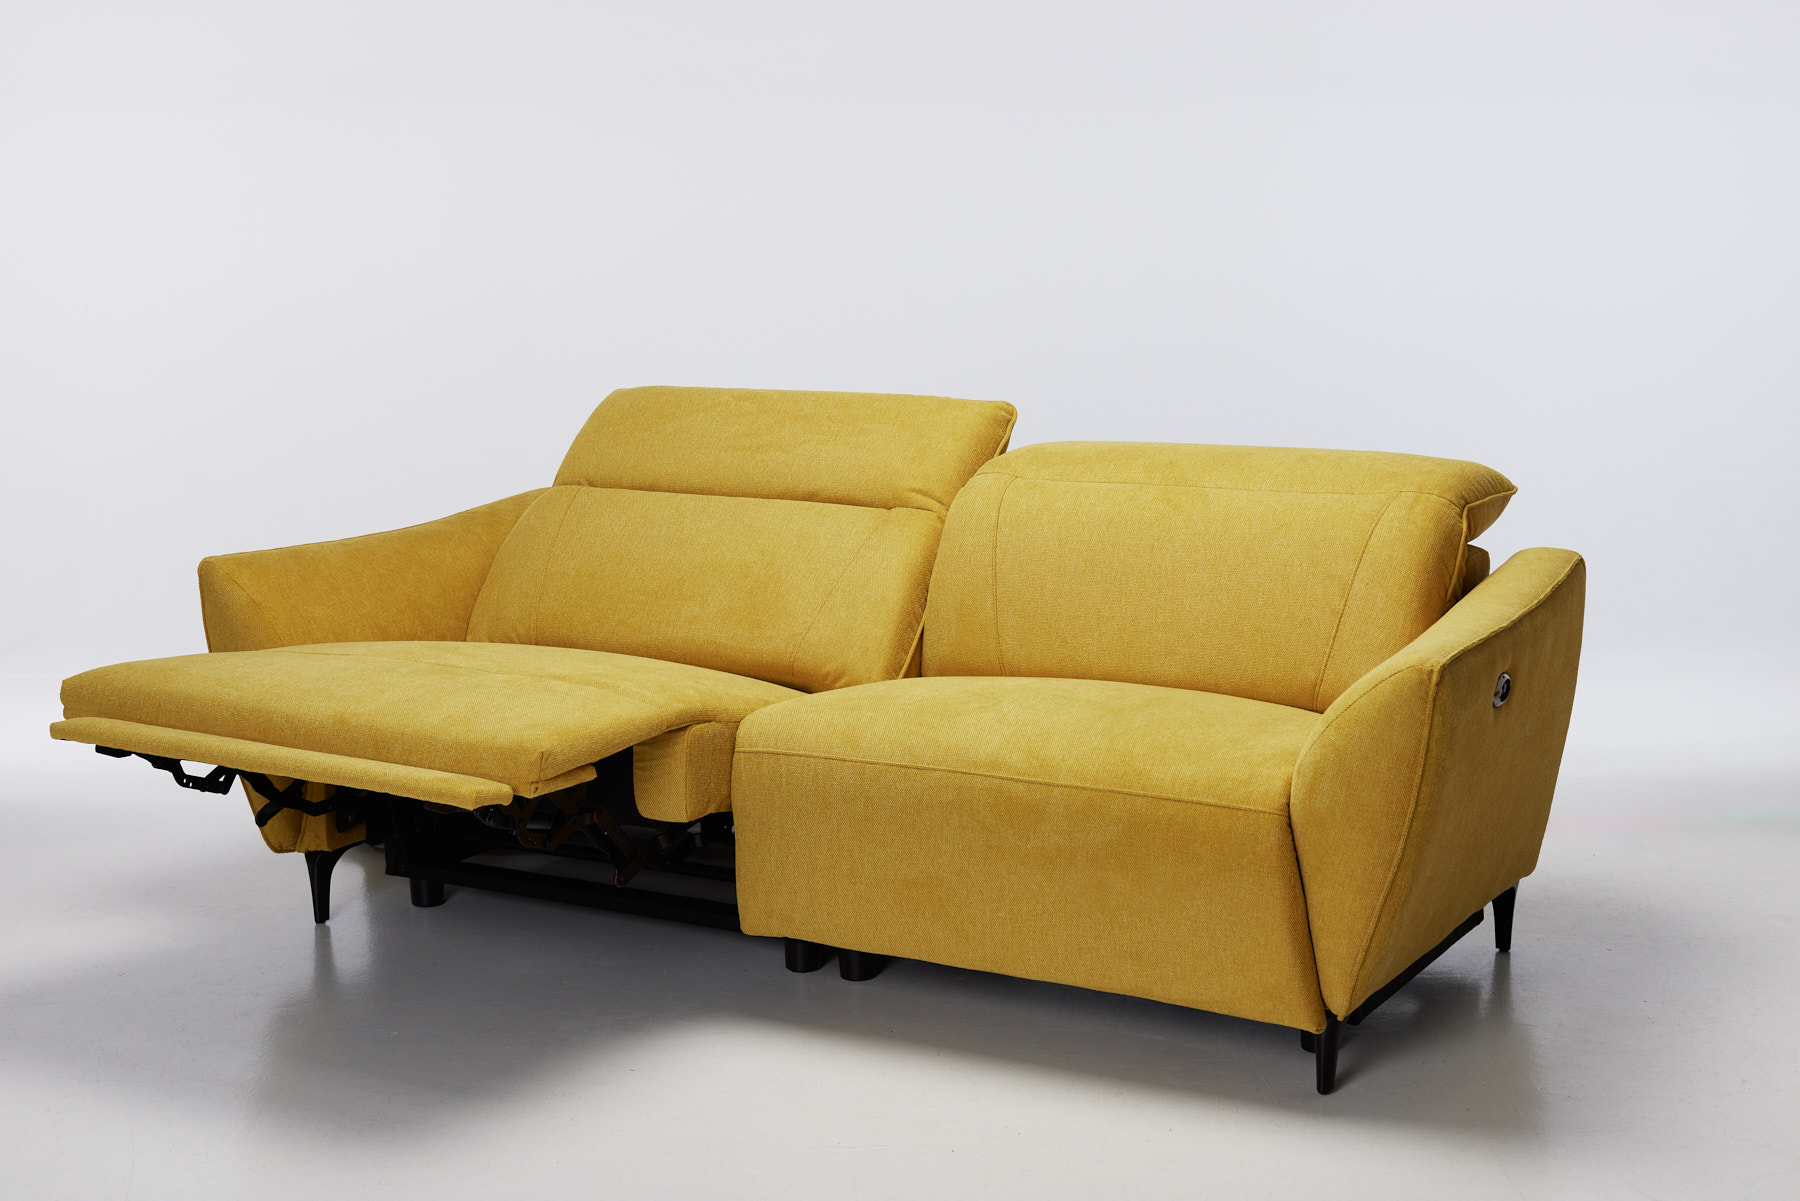 Muse - Electric Recliner 4 Seater Sofa, Ochre Yellow Premium Woven Linen